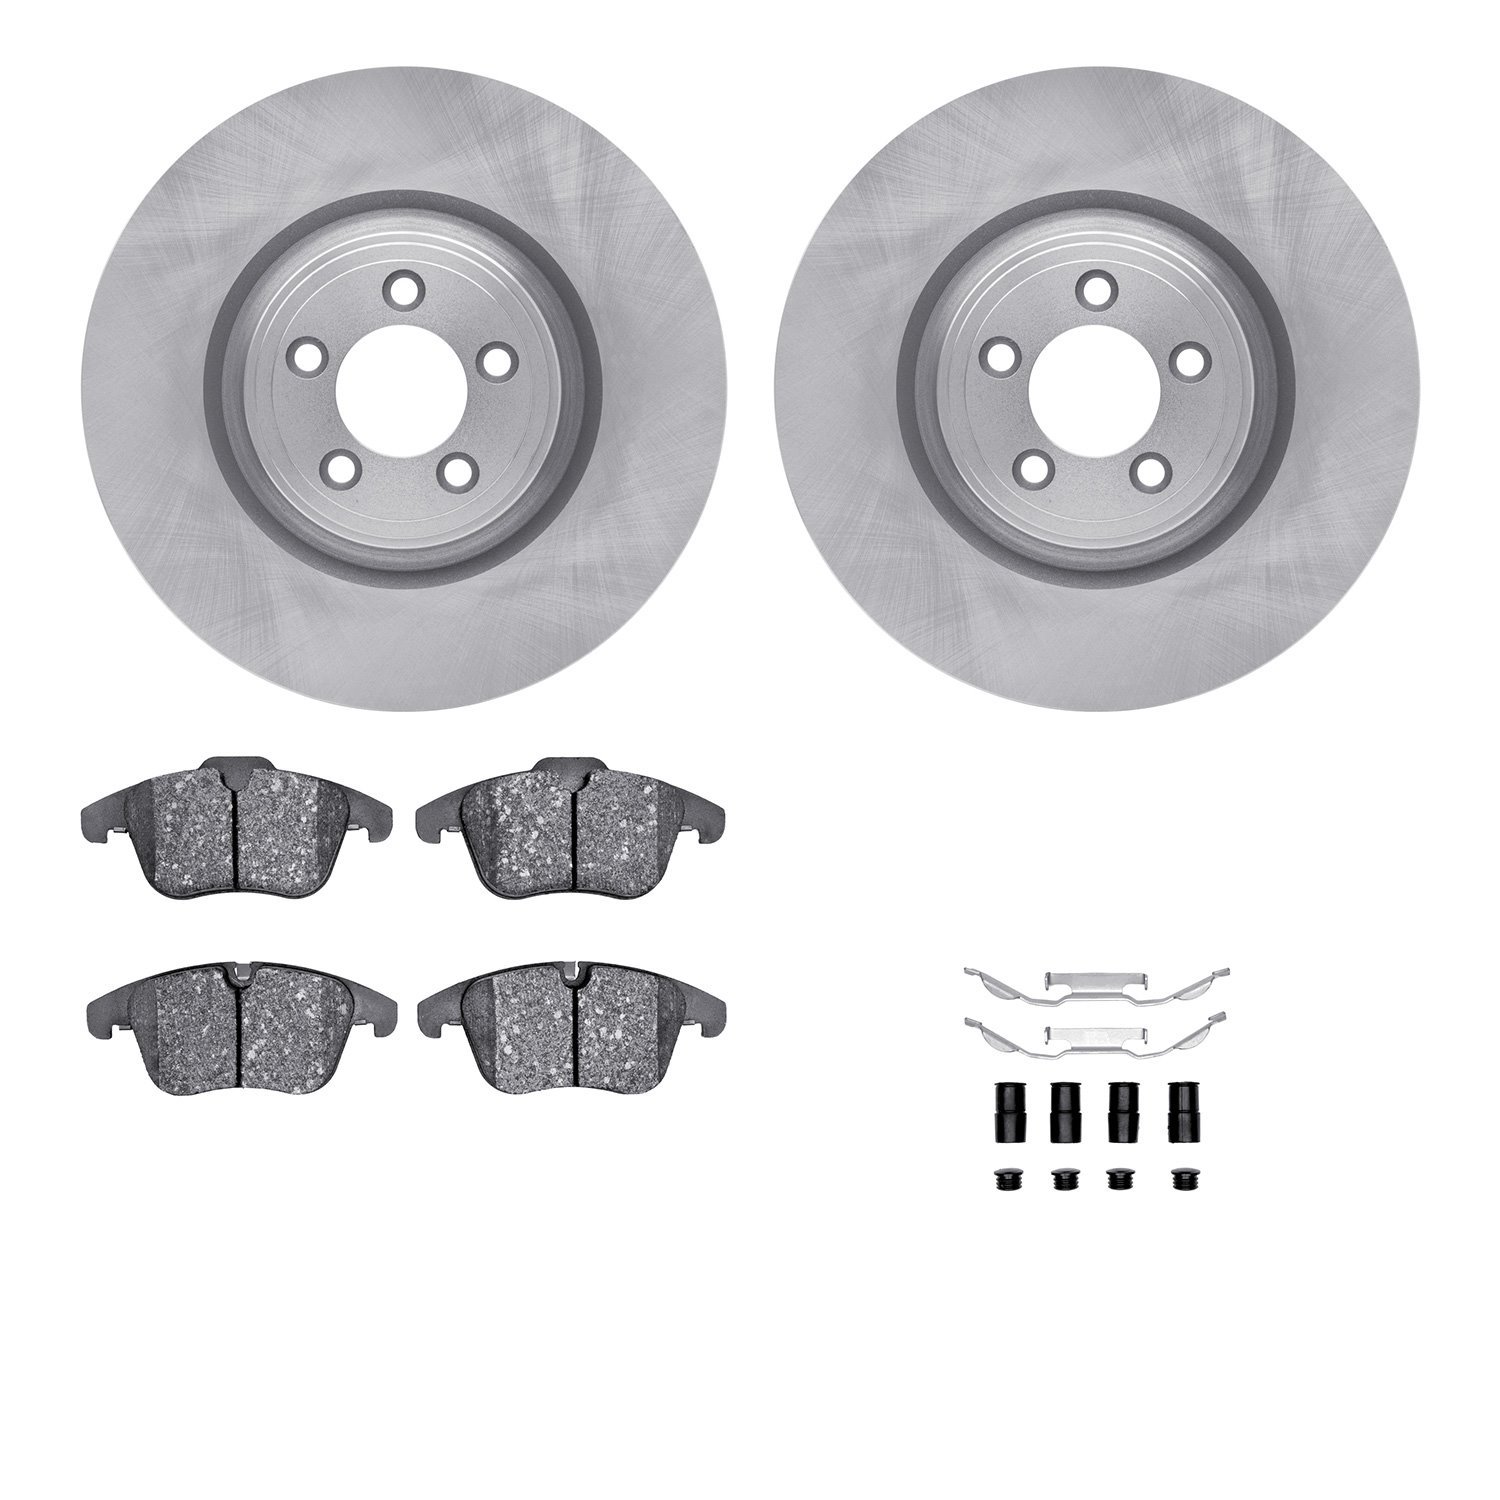 6312-20020 Brake Rotors with 3000-Series Ceramic Brake Pads Kit with Hardware, 2013-2015 Jaguar, Position: Front